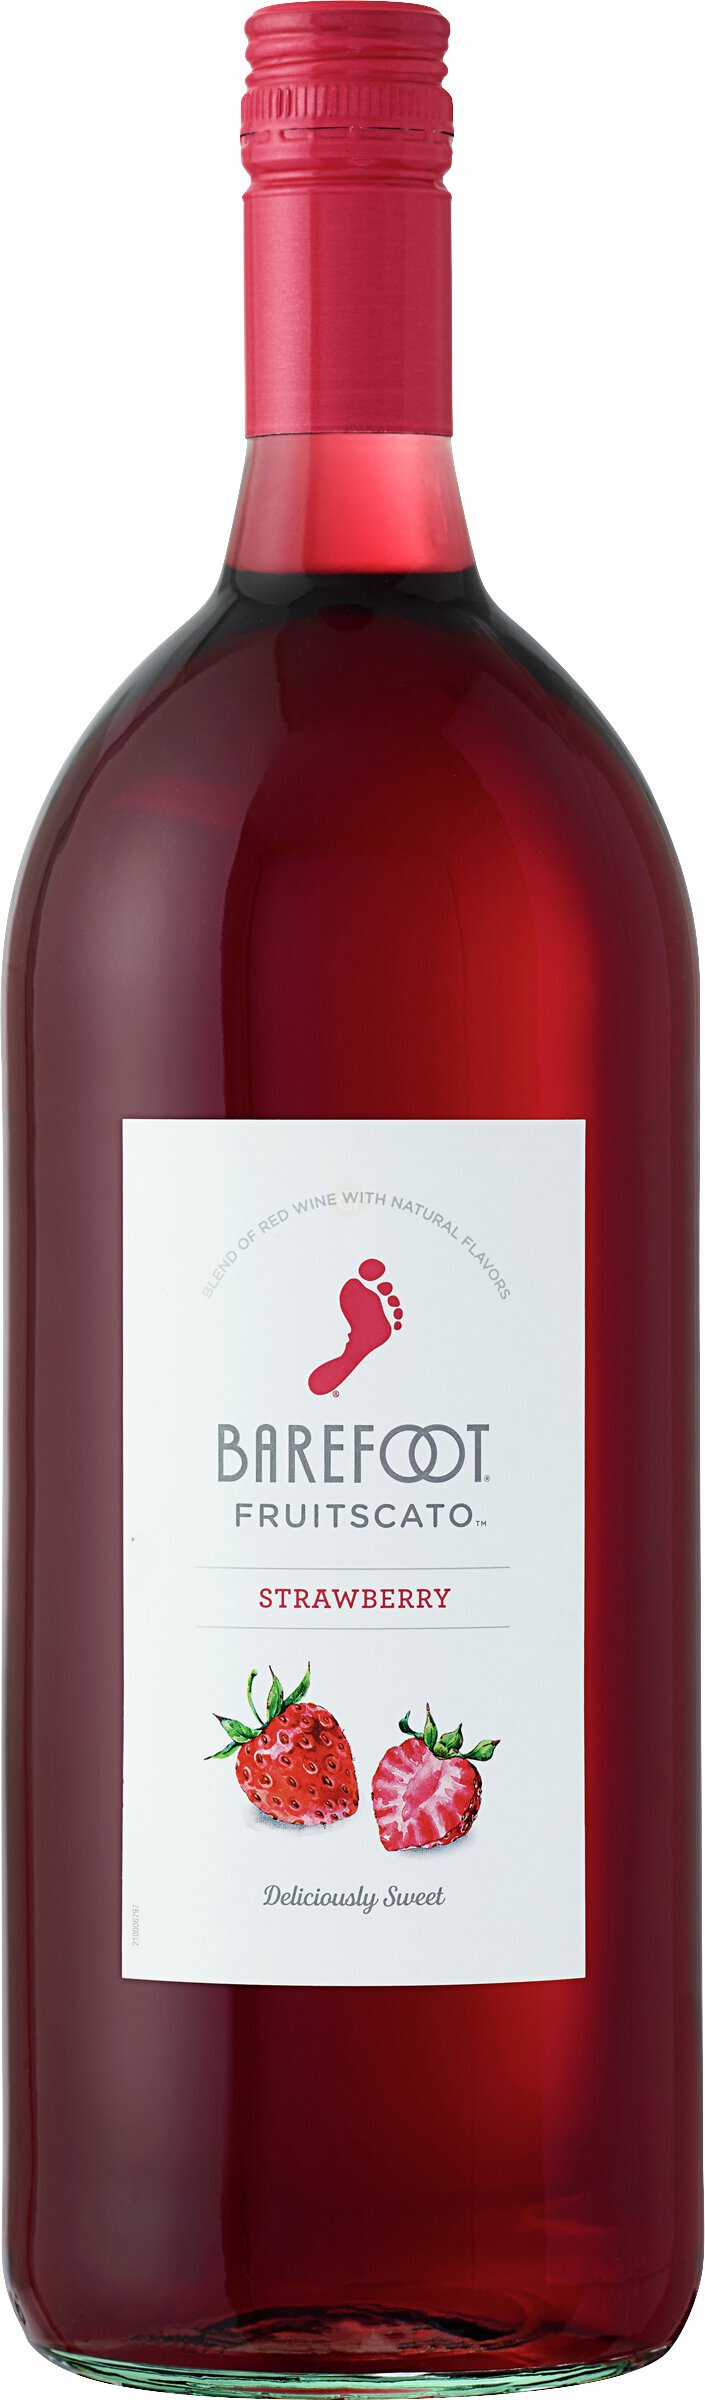 Barefoot Fruitscato Strawberry 750 ml